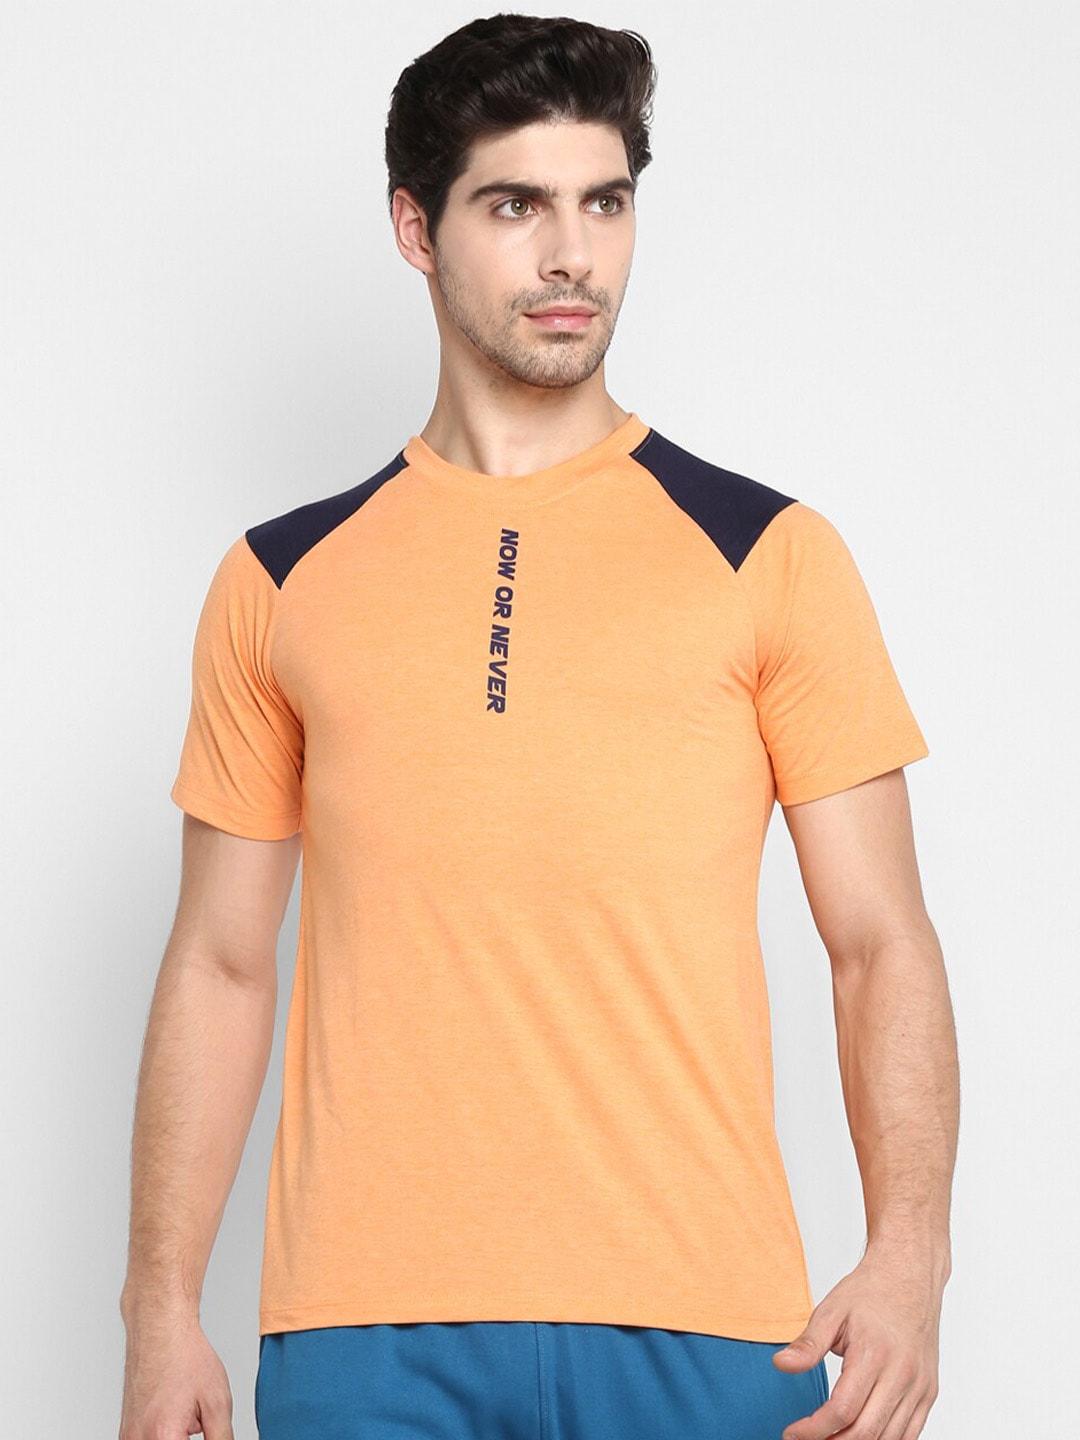 off limits raglan sleeves rapid-dry anti microbial cotton sports t-shirt